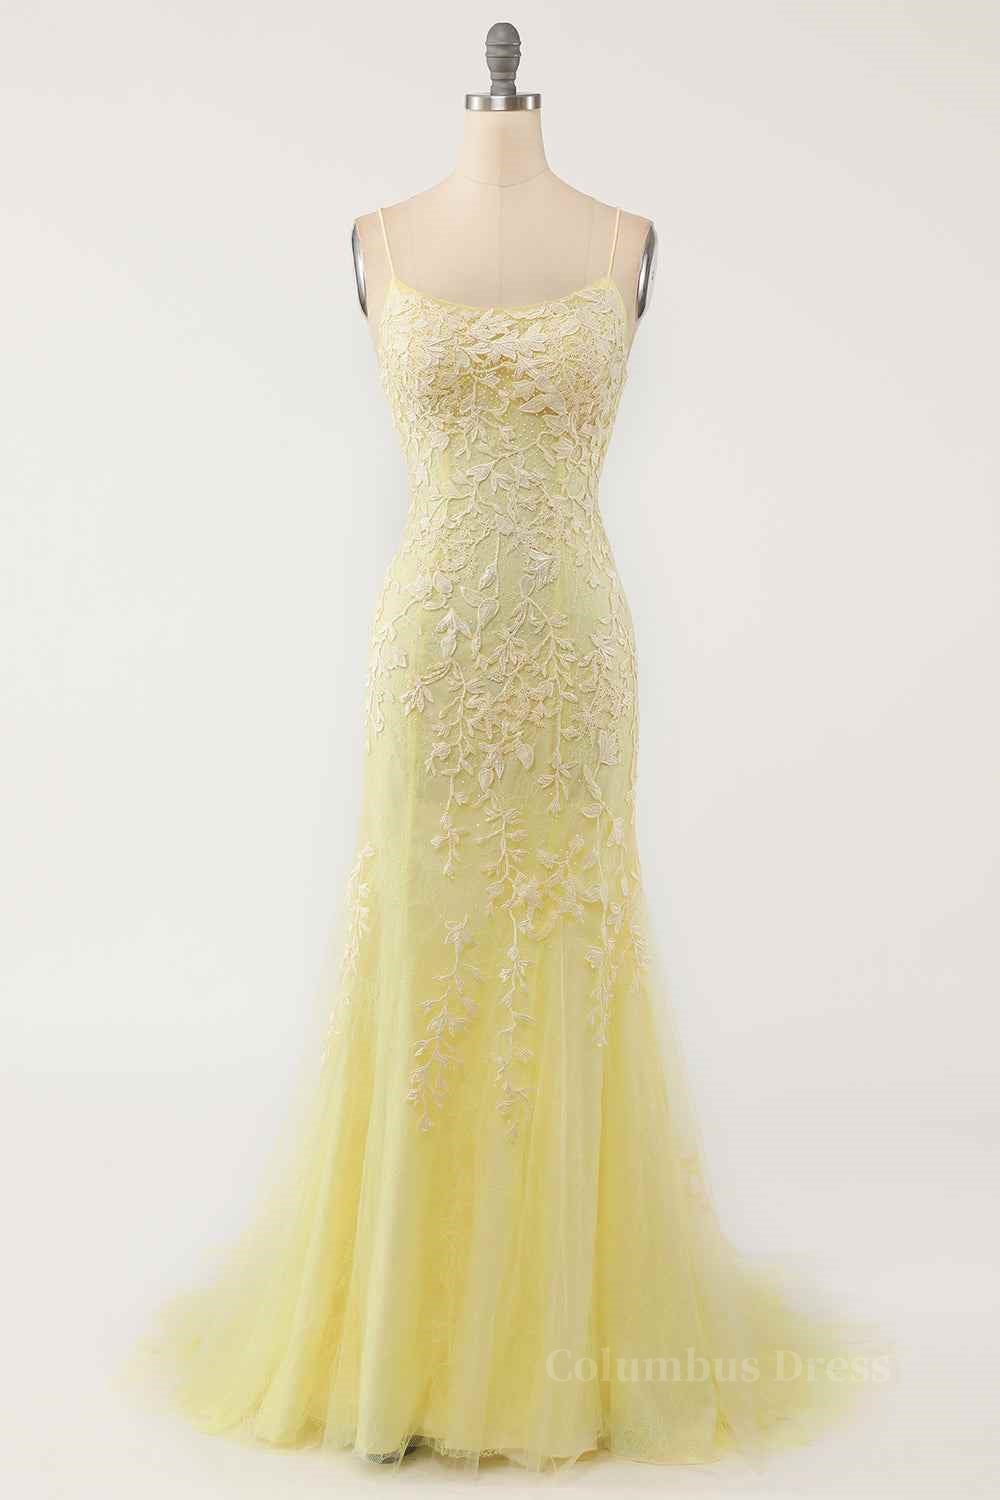 Light Yellow Light Blue Mermaid Scoop Neckline Applique Lace-Up Back Long Corset Prom Gown outfits, Party Dresse Idea